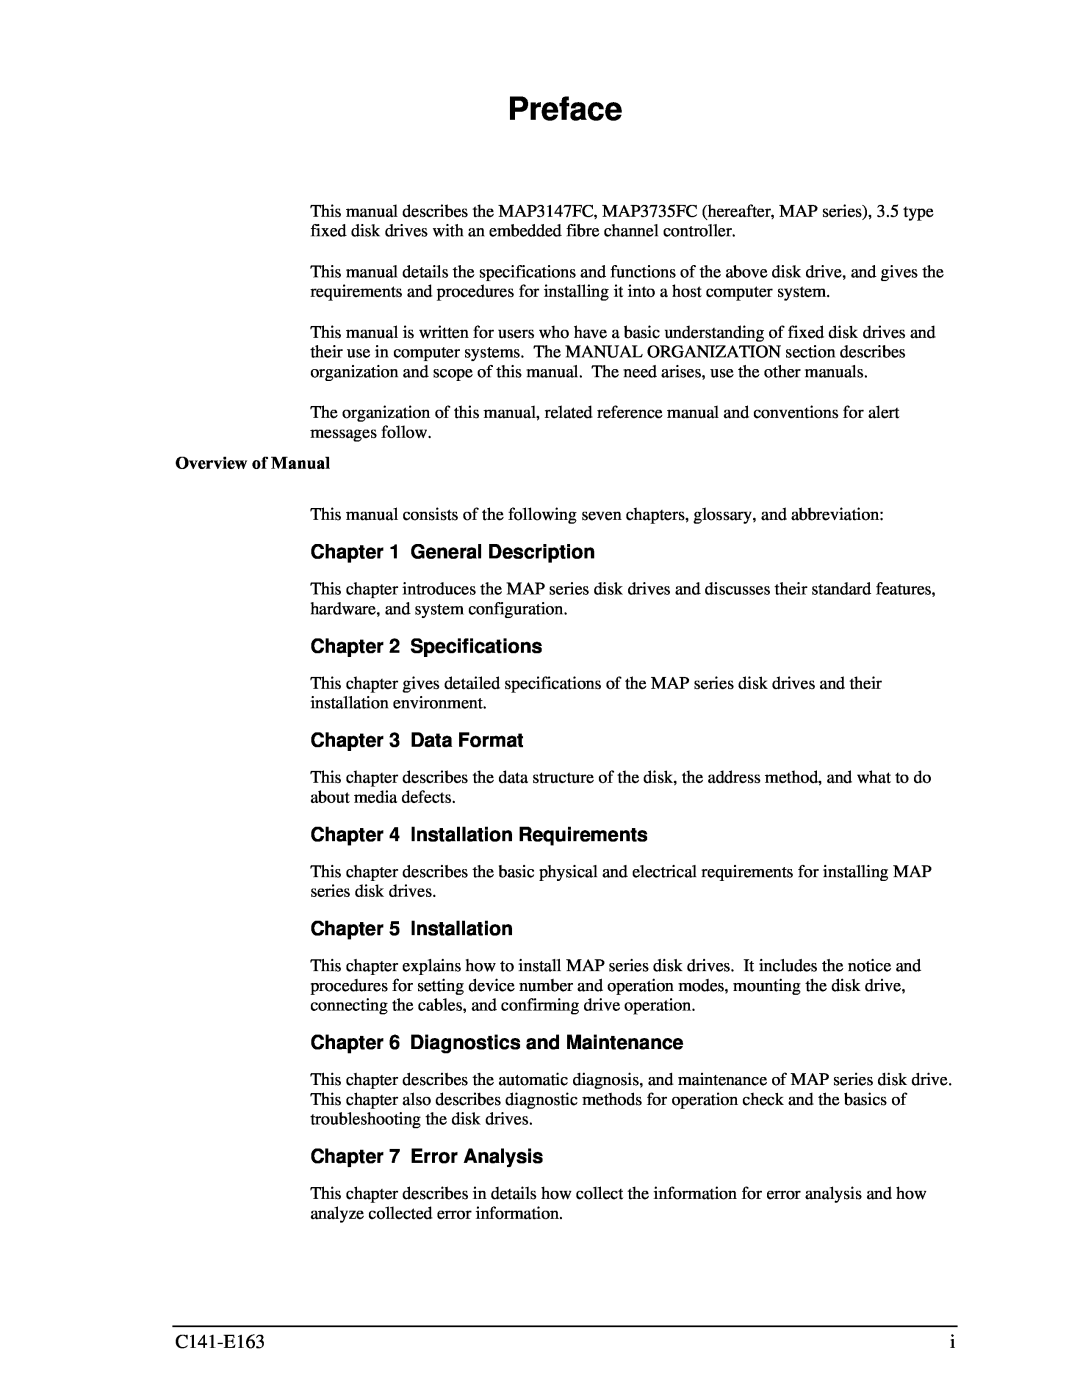 Fujitsu MAP3735FC Preface, General Description, Specifications, Data Format, Installation Requirements, Error Analysis 